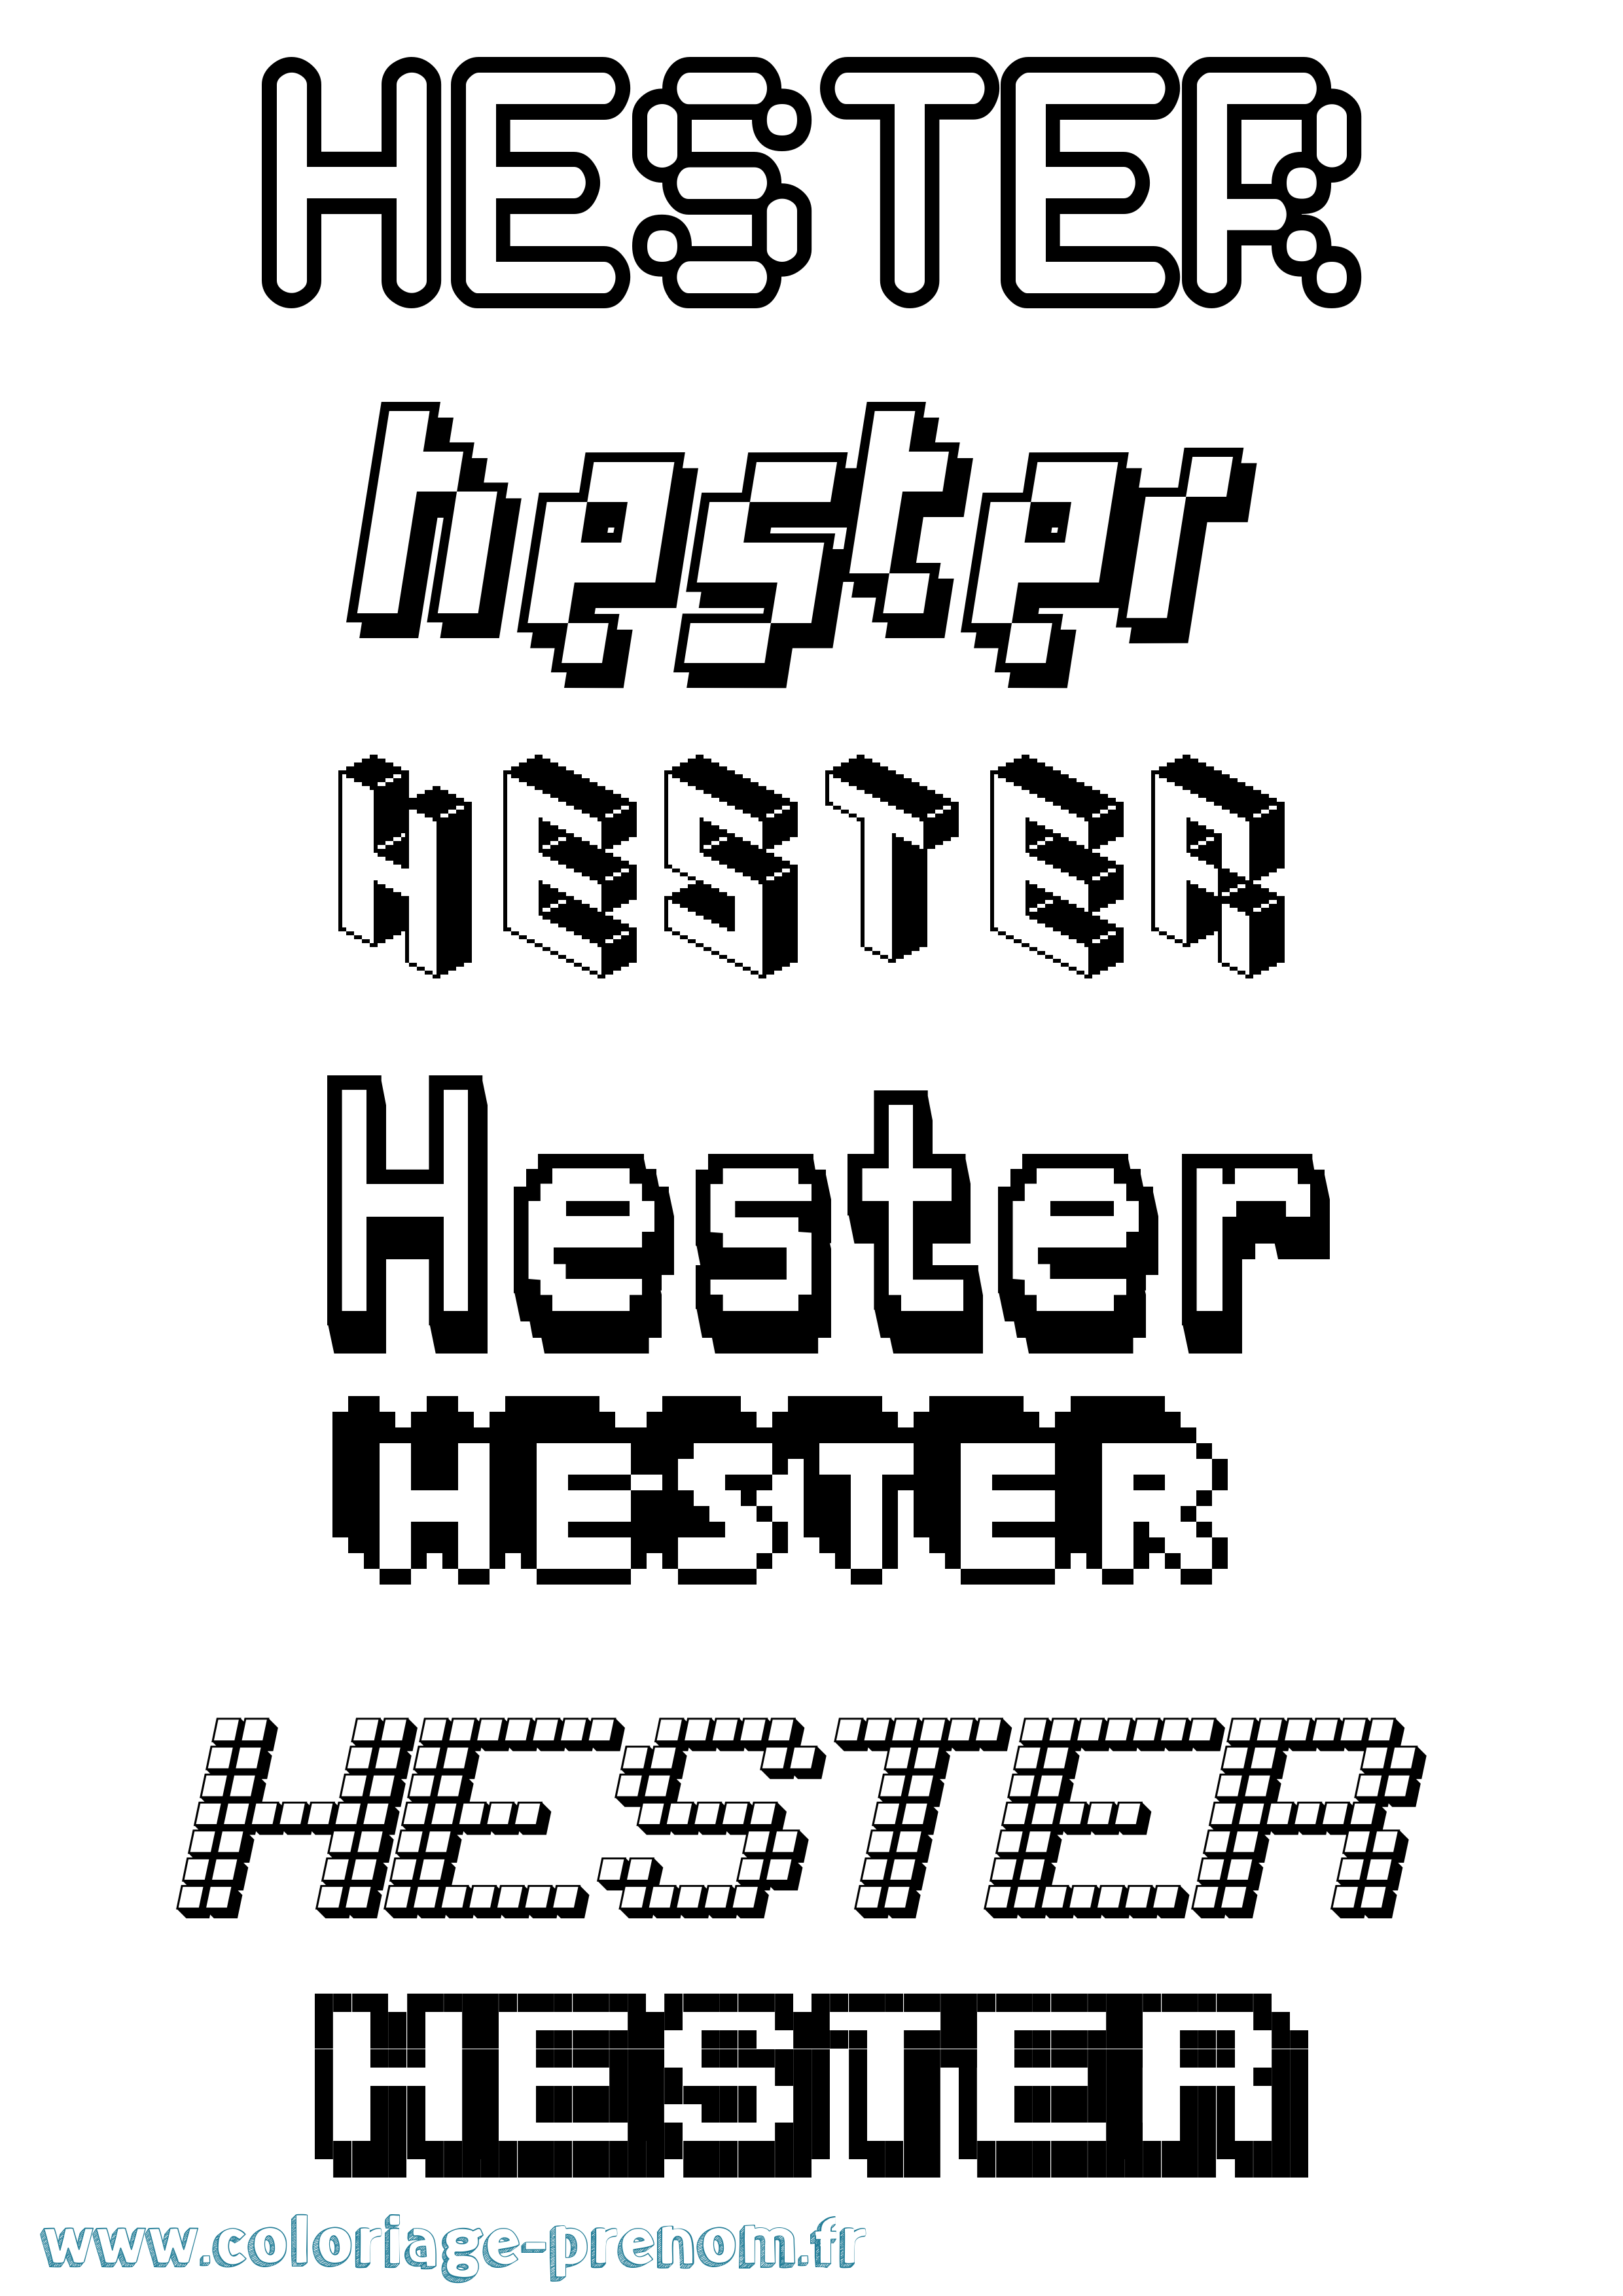 Coloriage prénom Hester Pixel